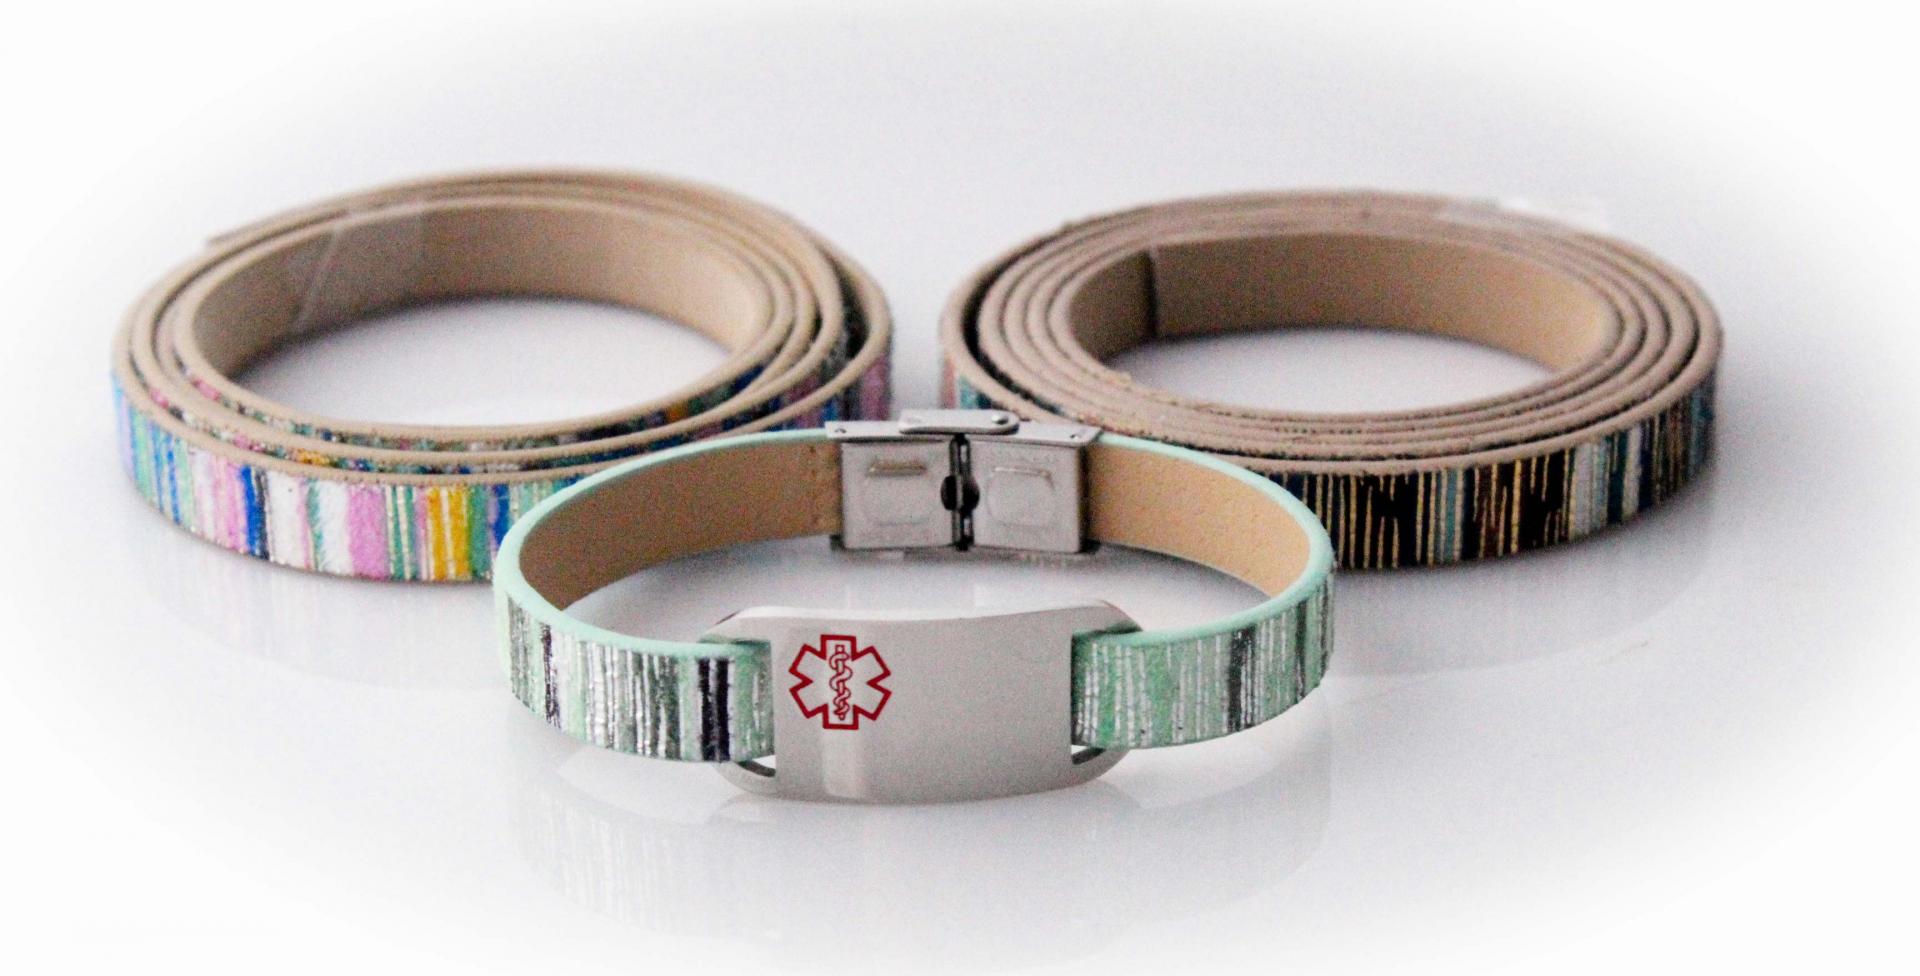 Medical Alert Colourful Flat Leather Bracelet - Customise